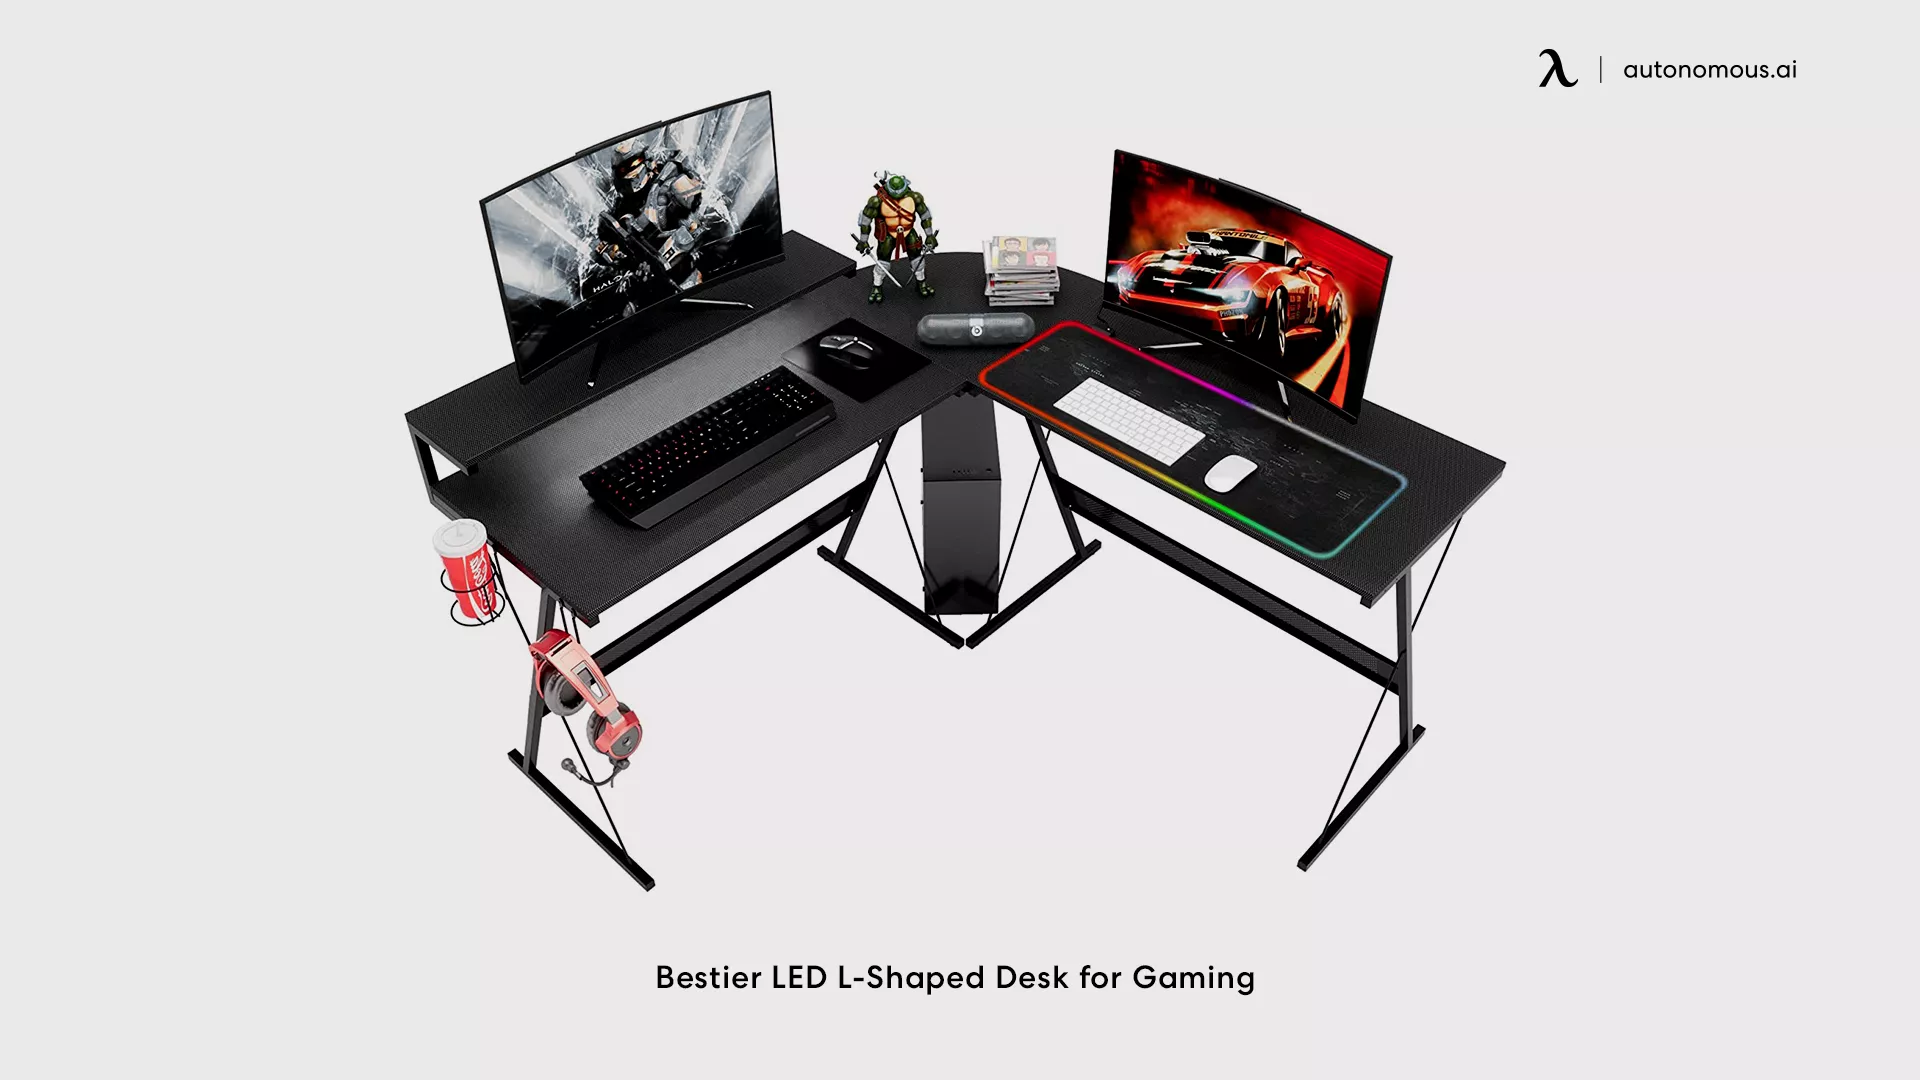 Bestier LED L-Shaped Desk for Gaming